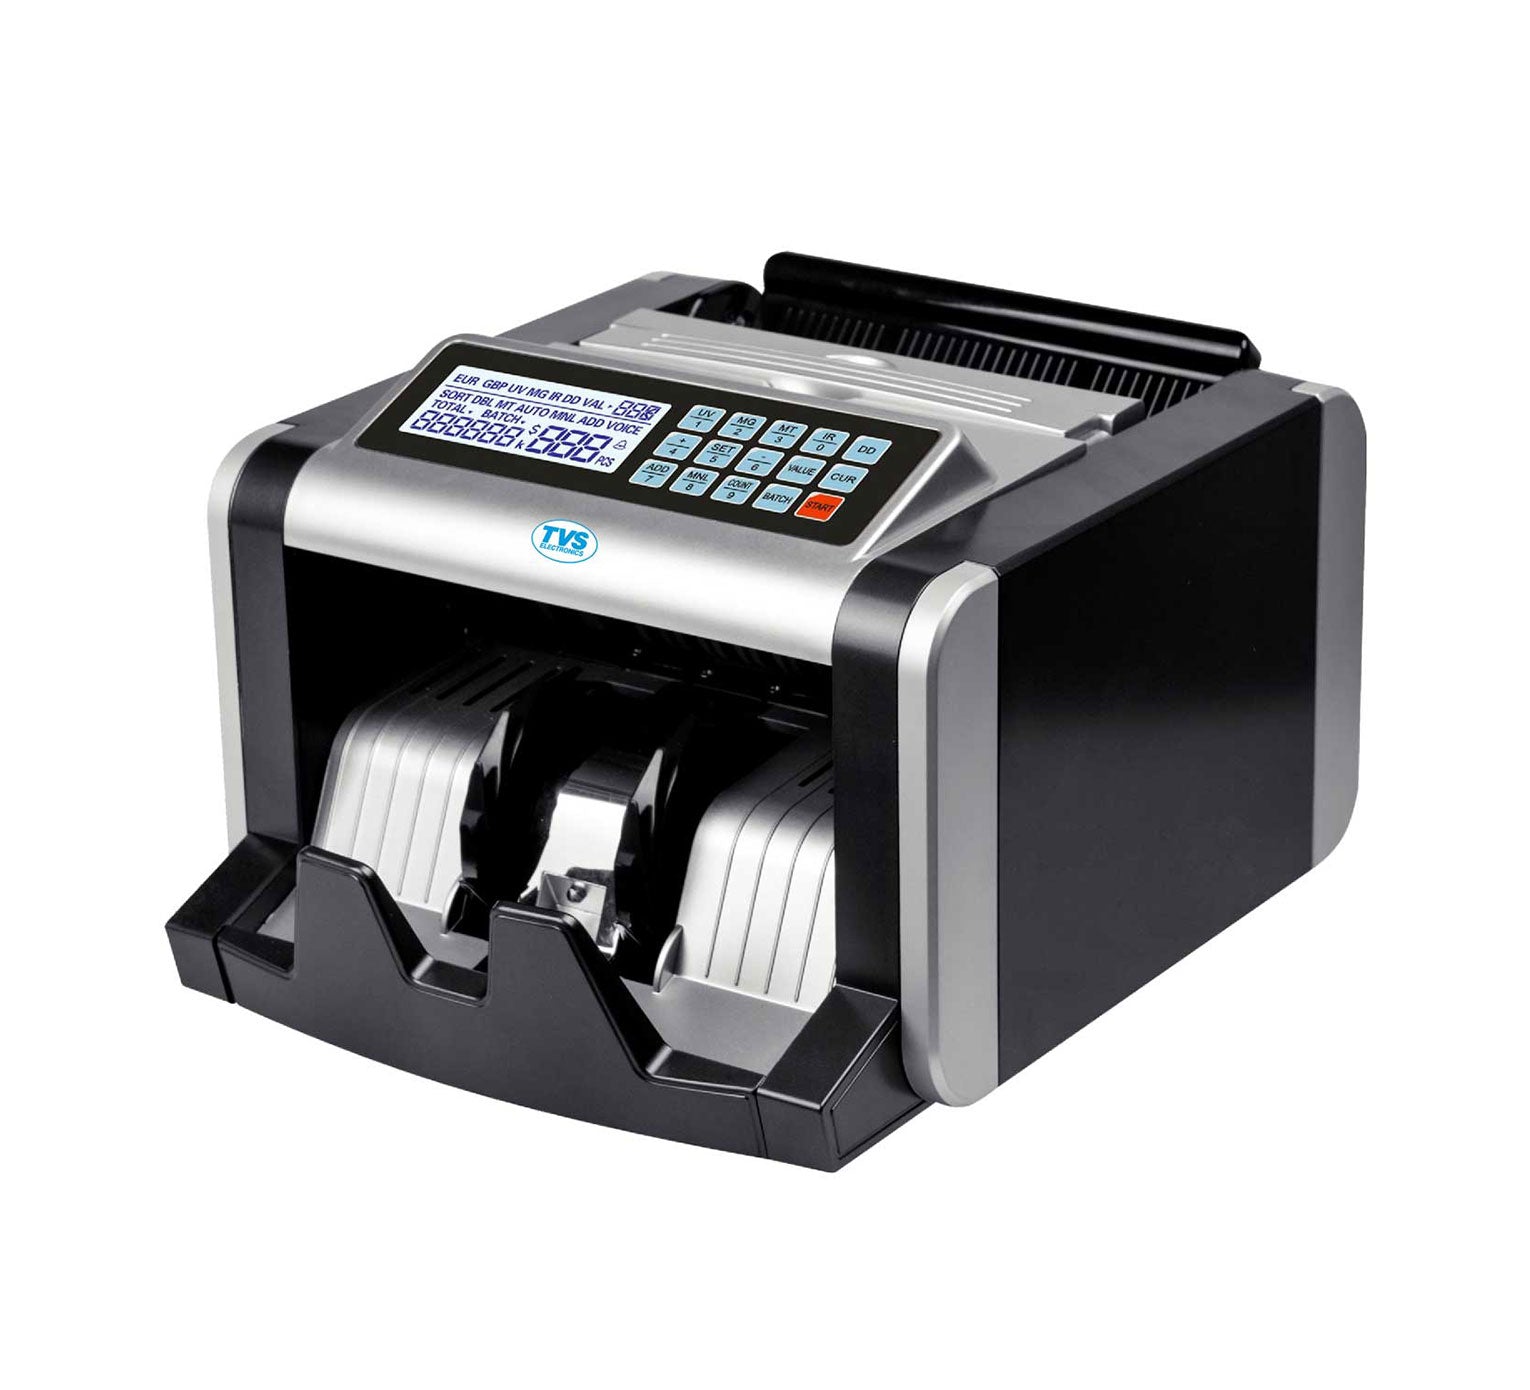 Cc 232 Classic Plus Cash Counting Machine Tvs Electronics Online Store